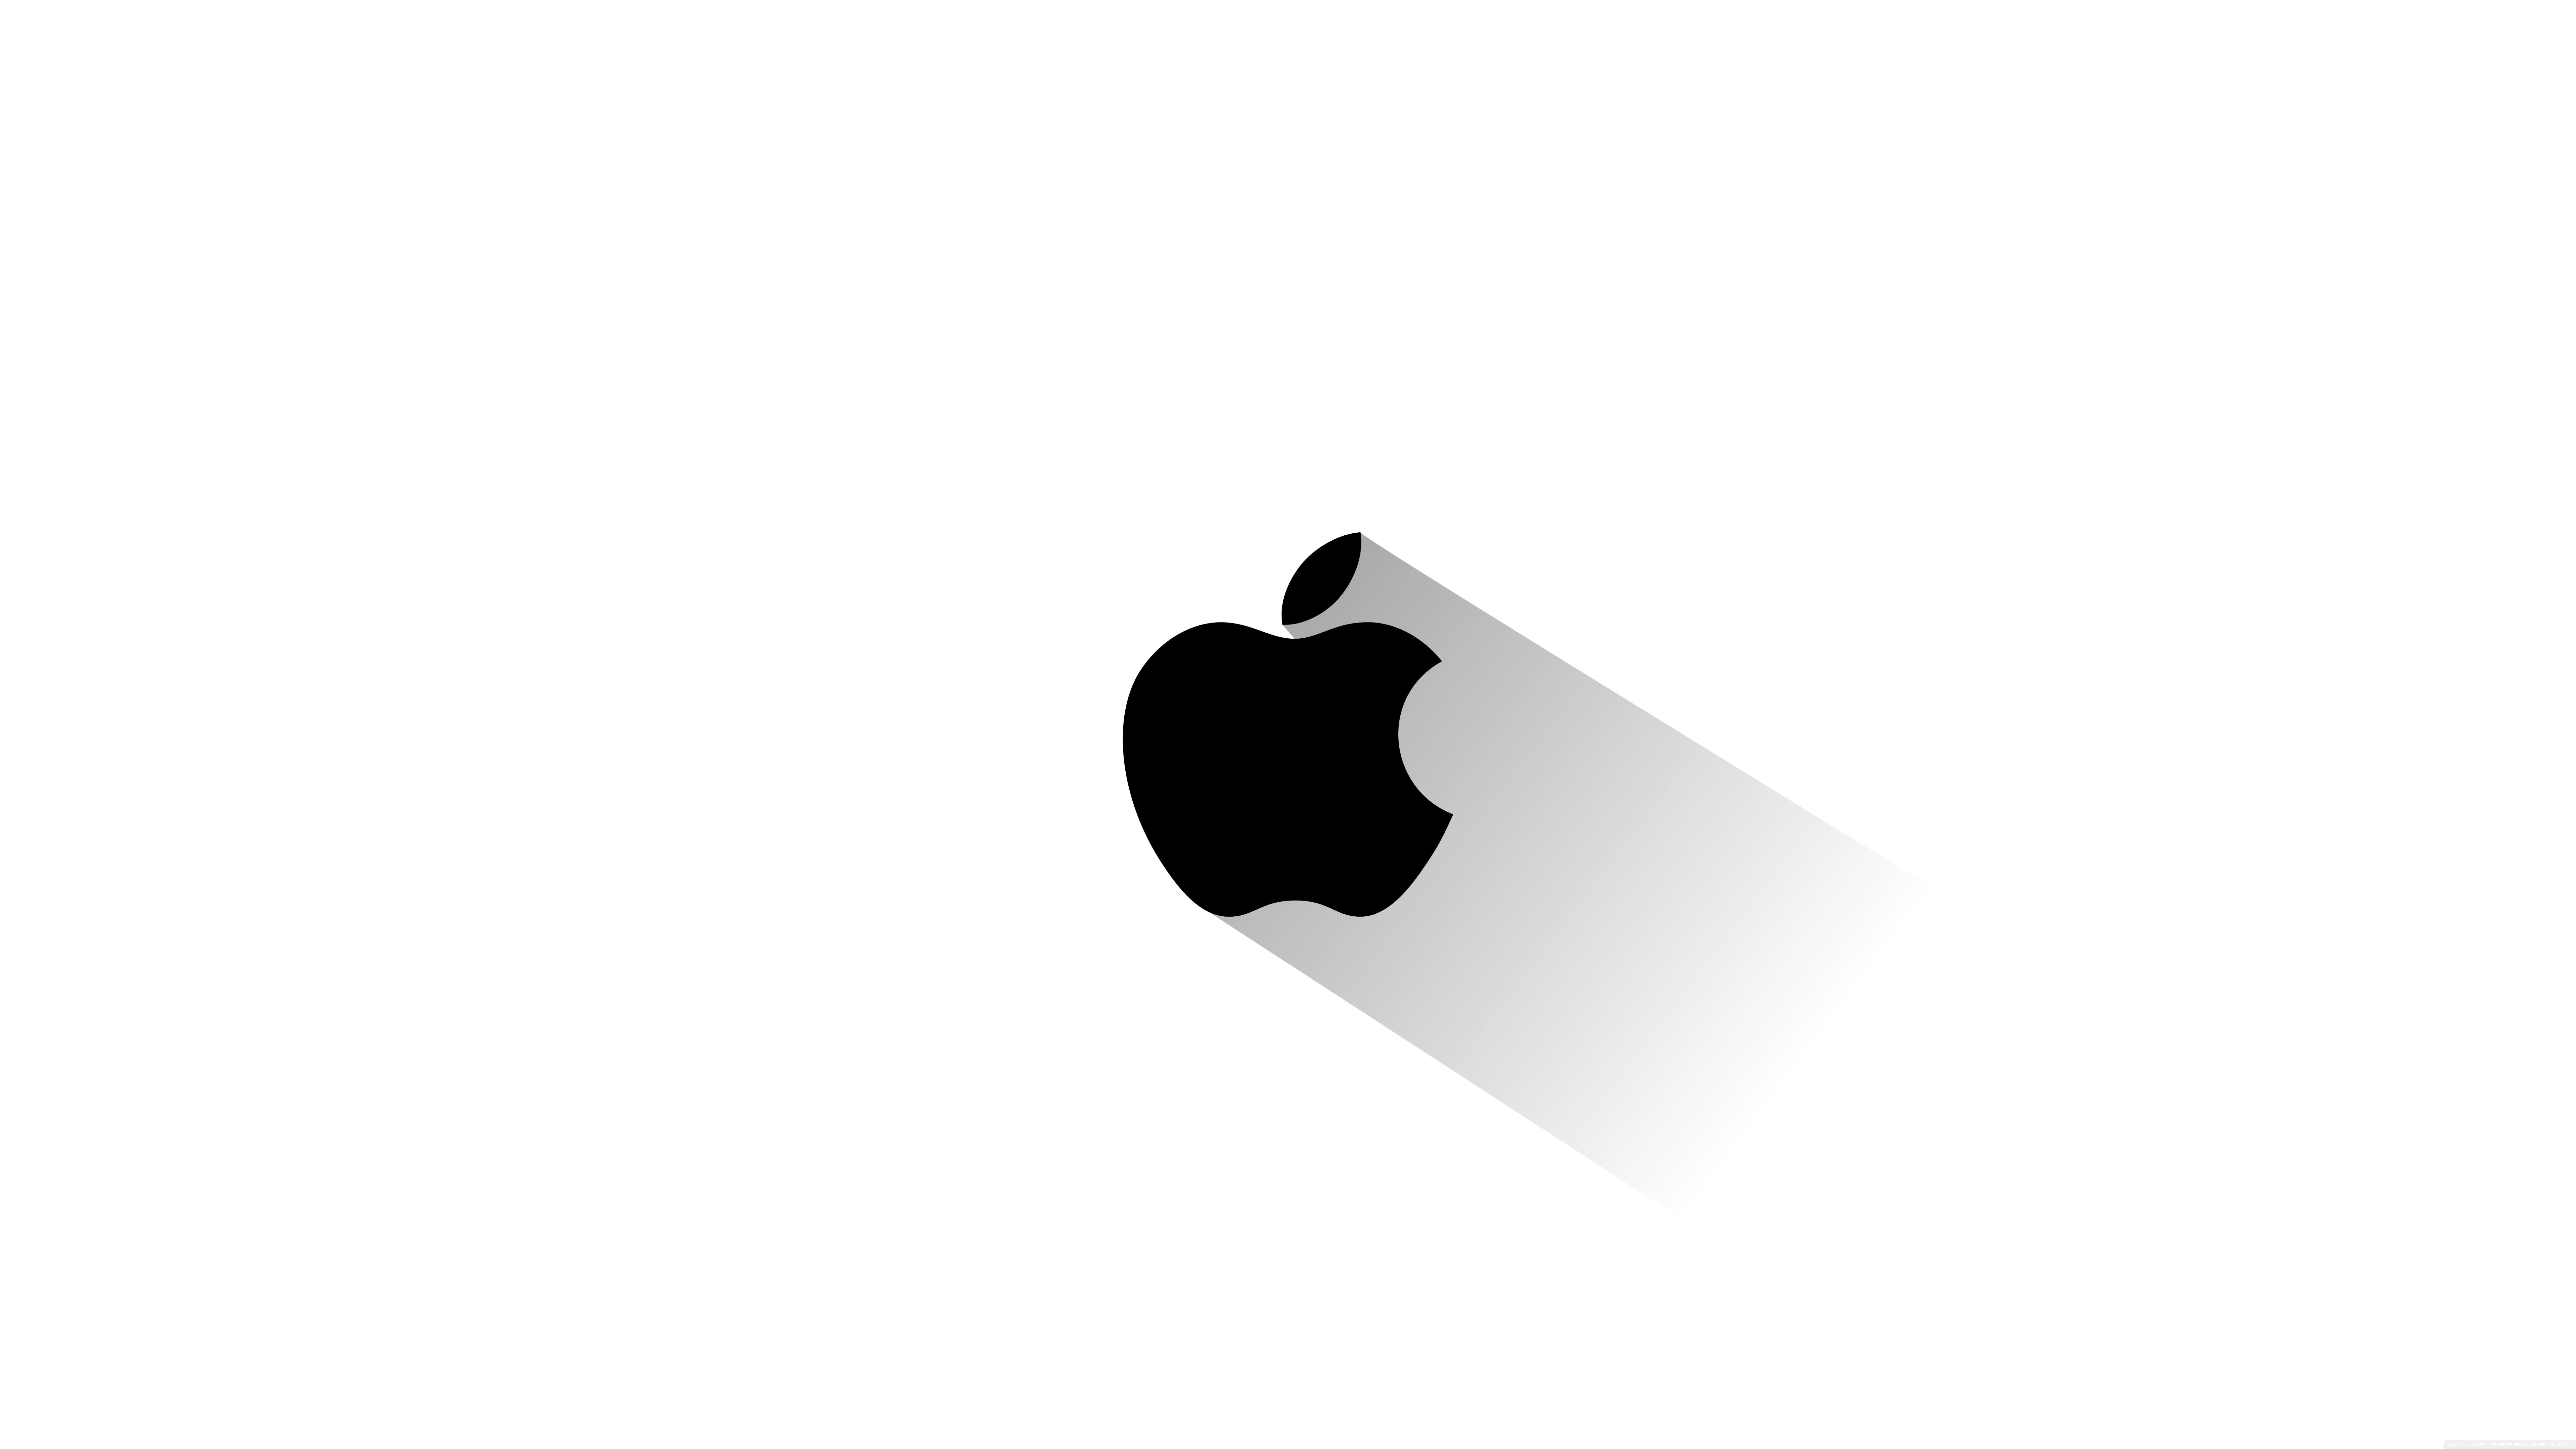 General 7680x4320 iMac Mac OS X minimalism white brand